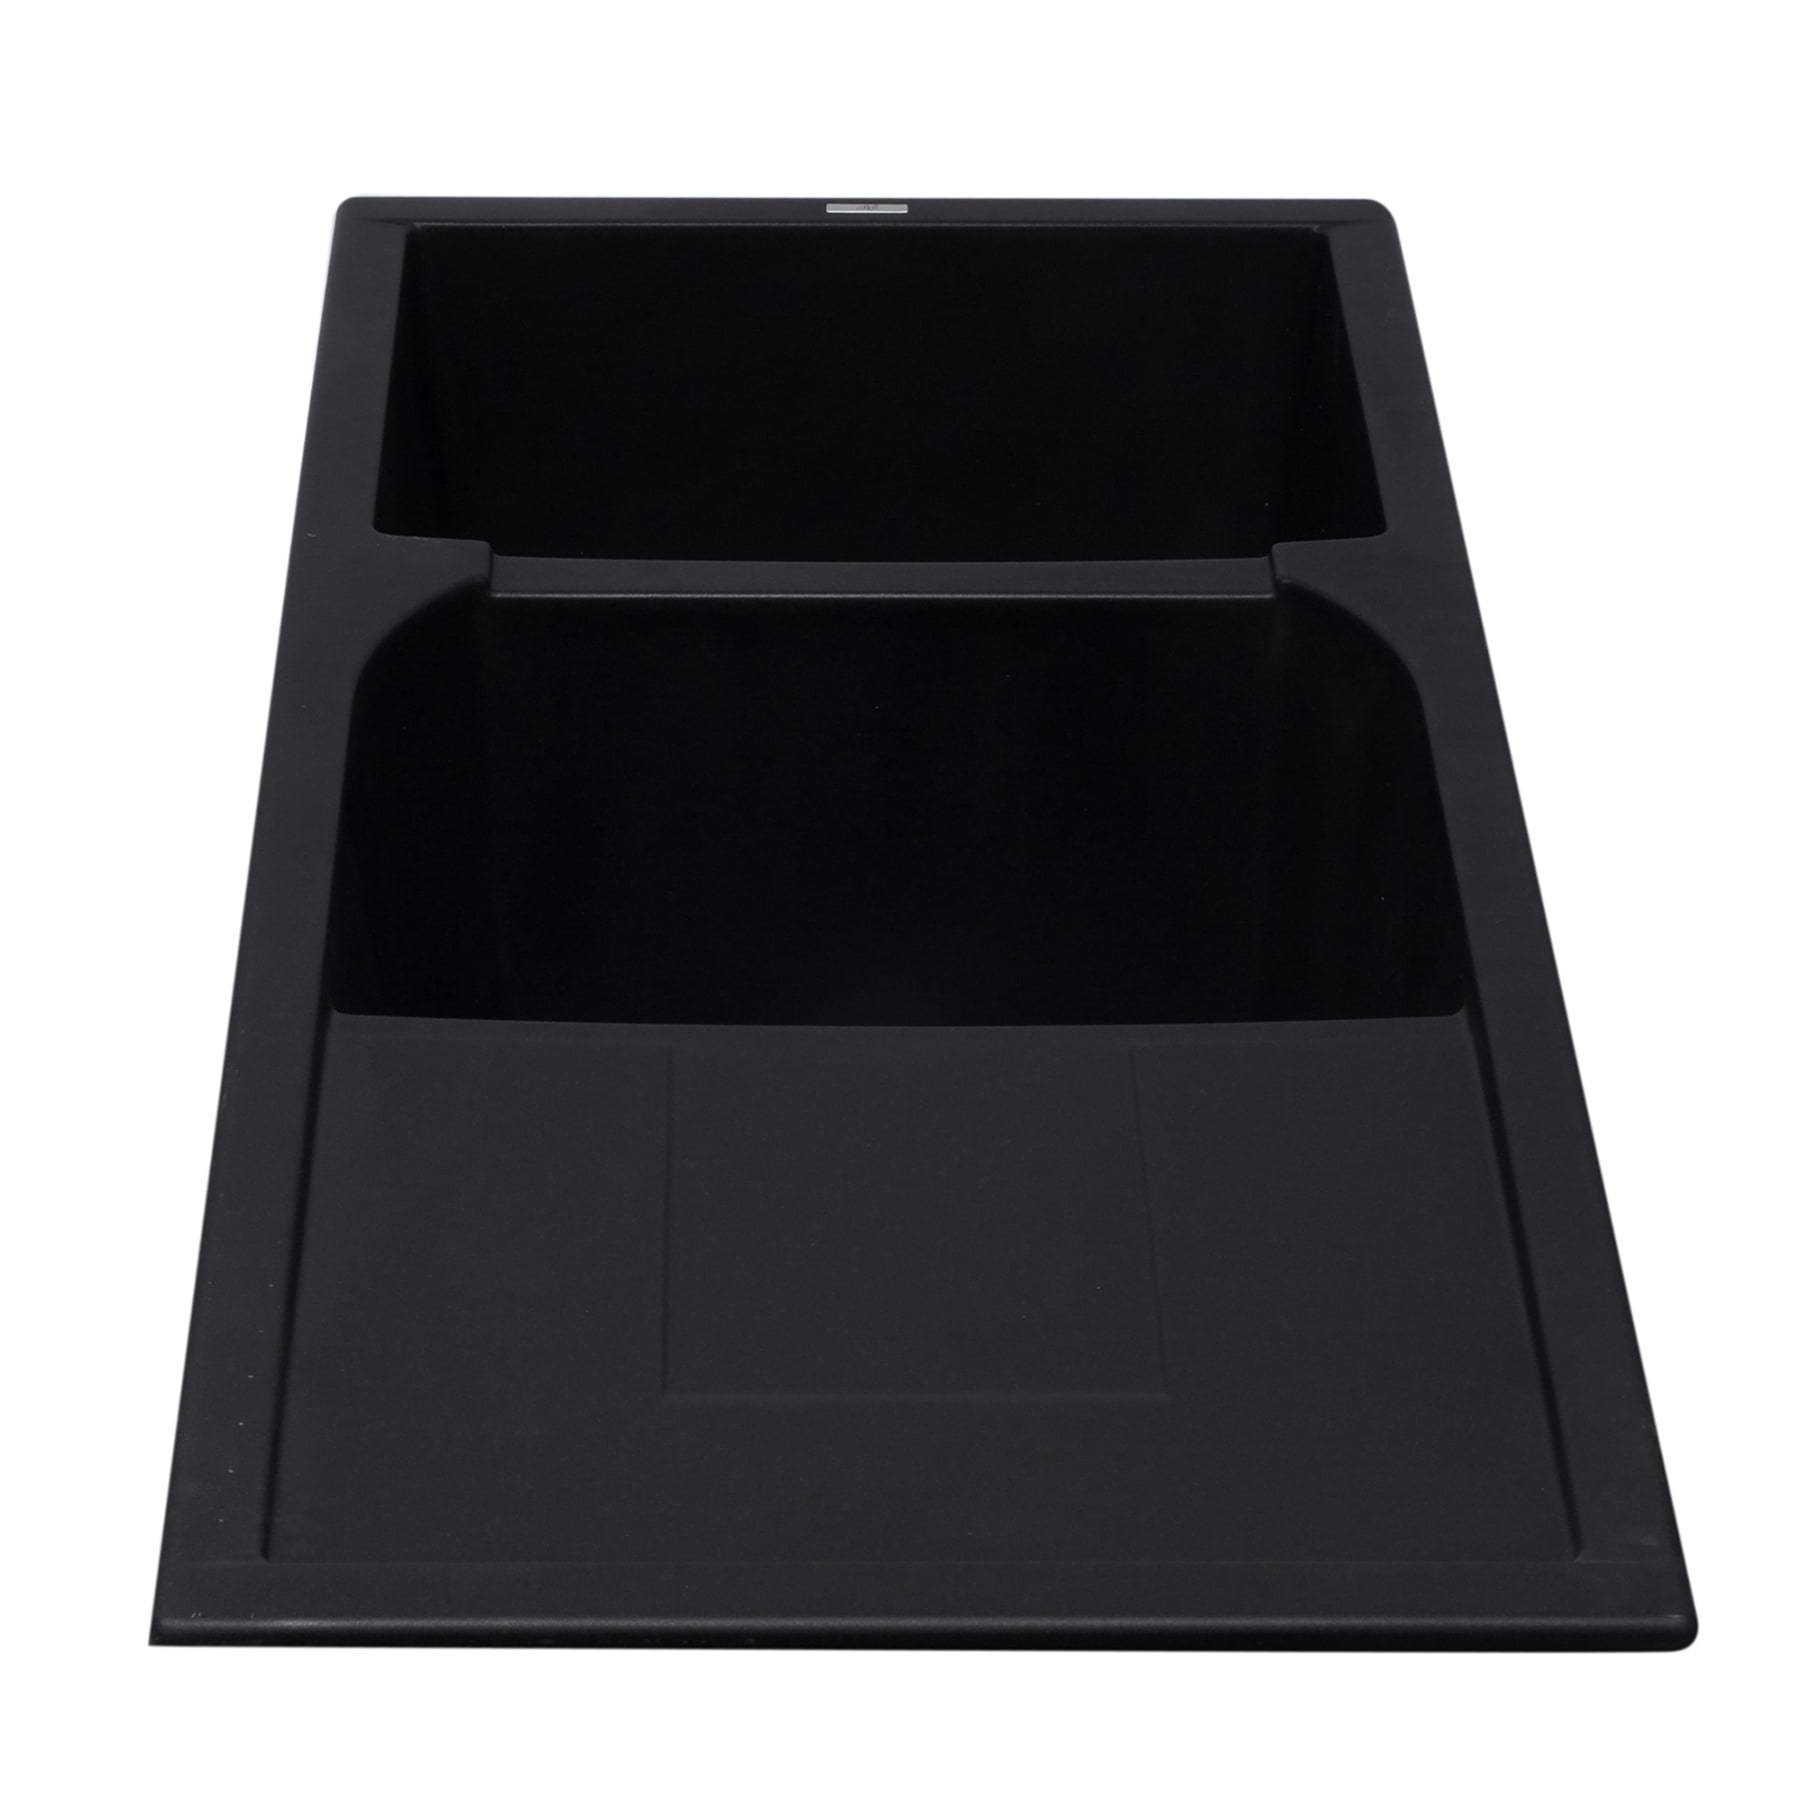 ALFI Black 46 Double Bowl Granite Composite Kitchen Sink with